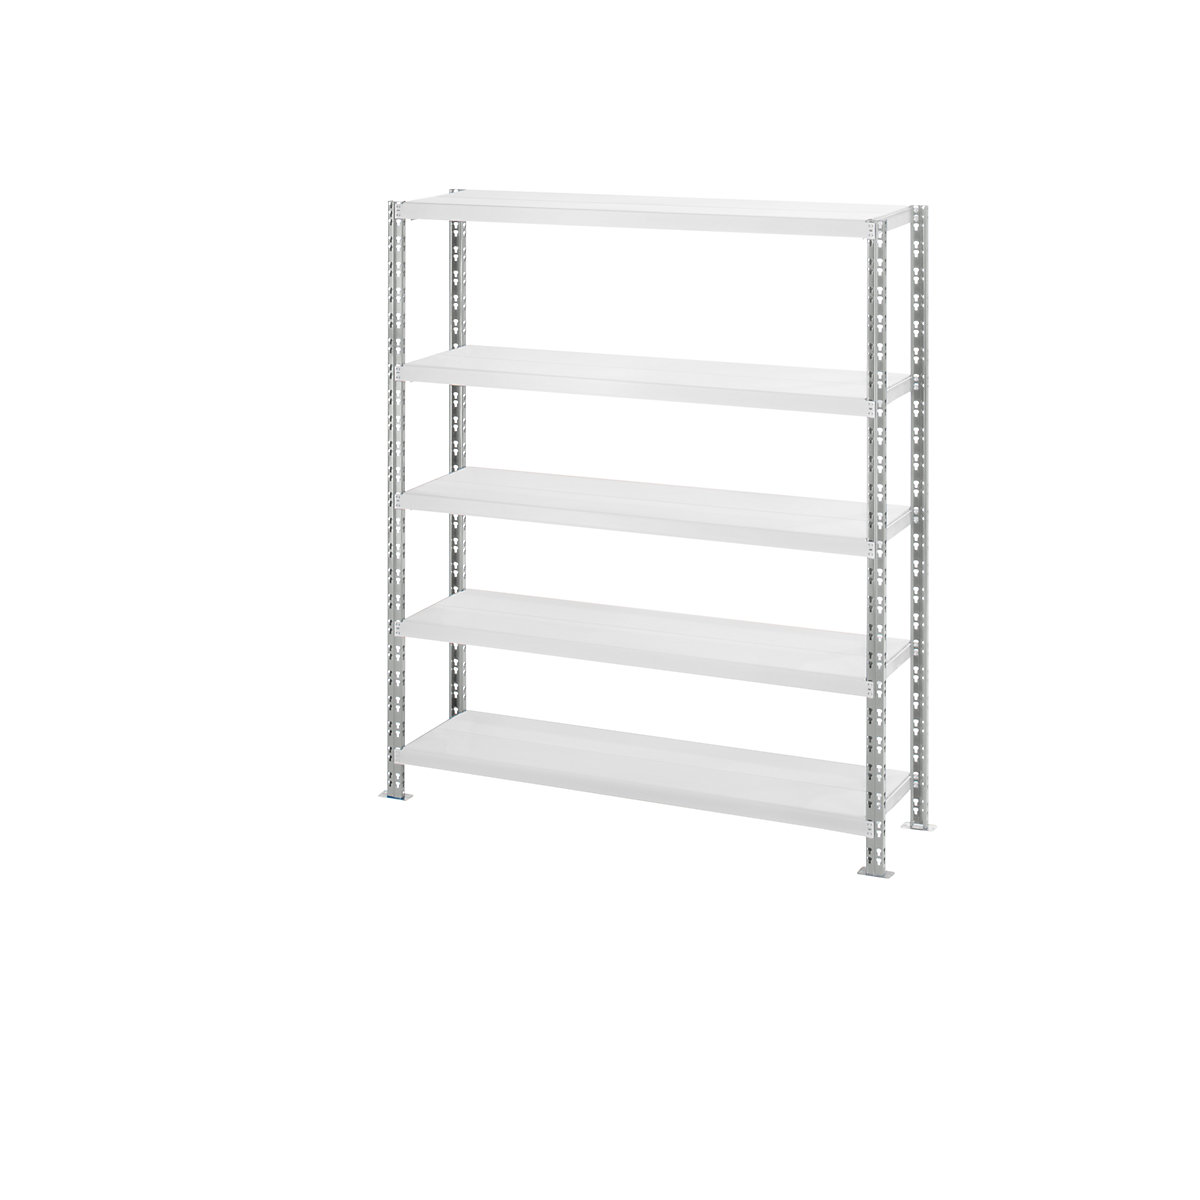 Wide span shelf unit with sheet steel shelves, depth 400 mm, standard shelf unit, HxW 1820 x 1550 mm